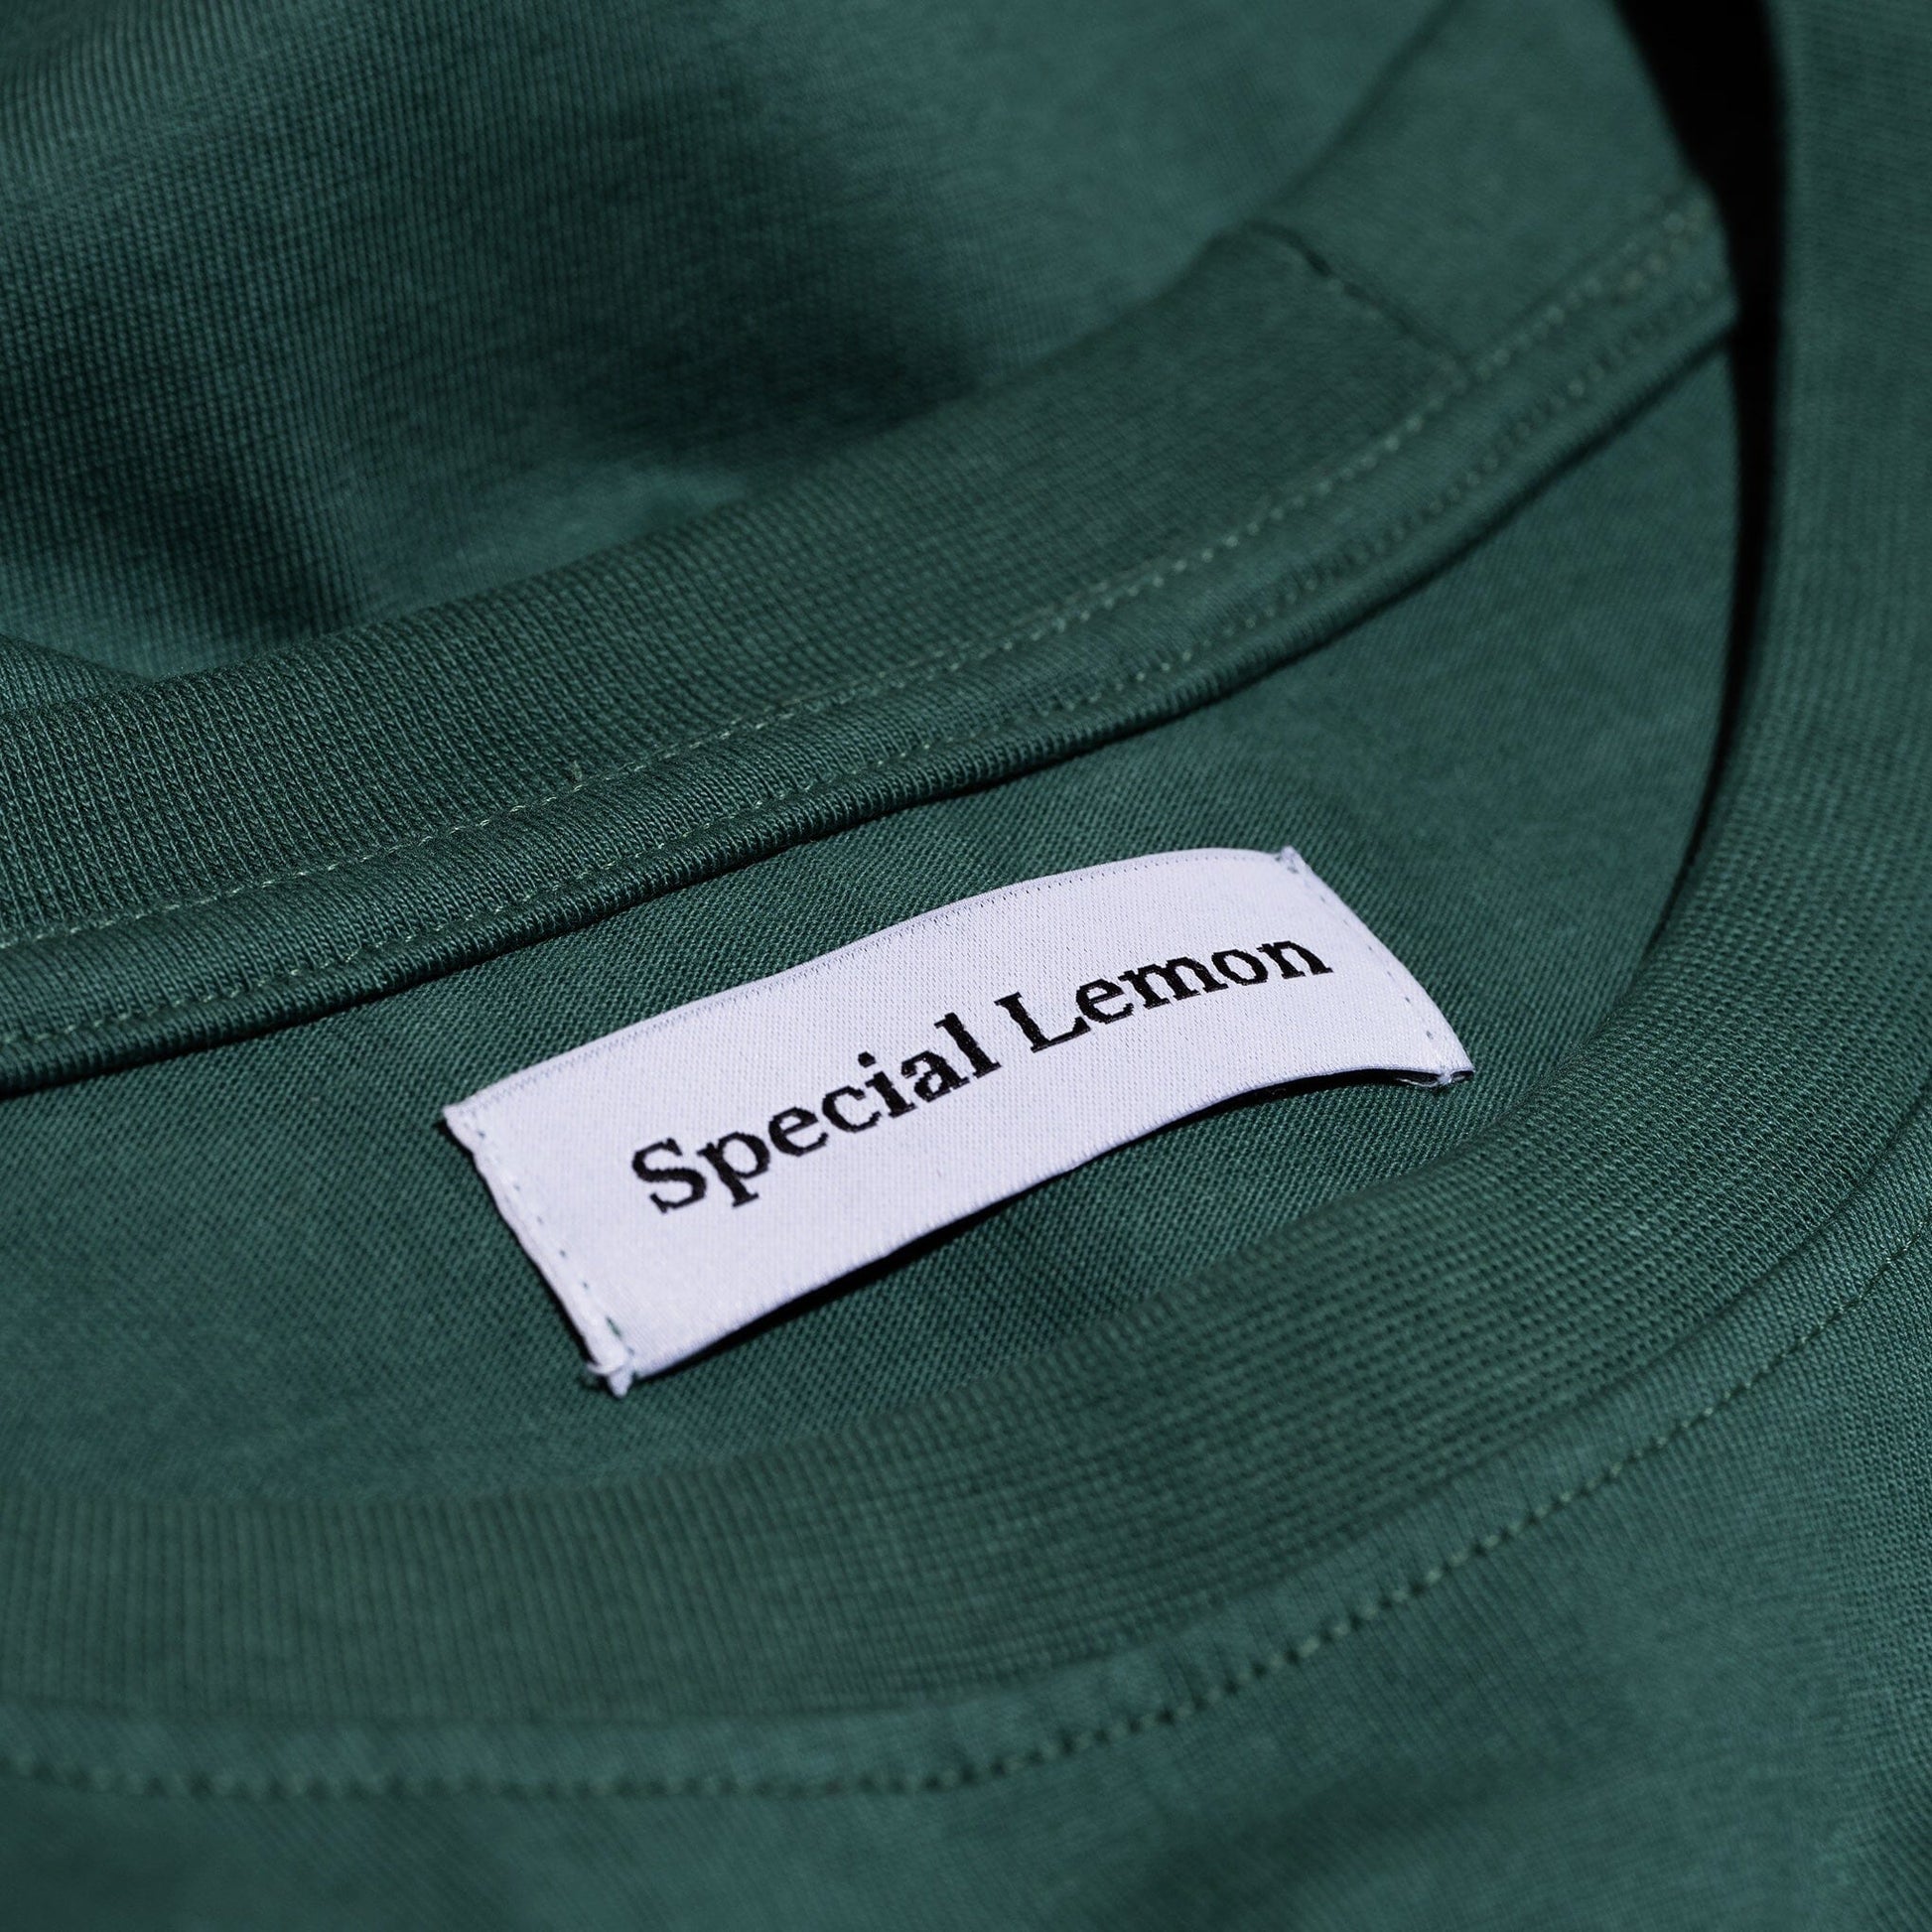 Special Lemon T-shirt - Green T-shirt Special Lemon 